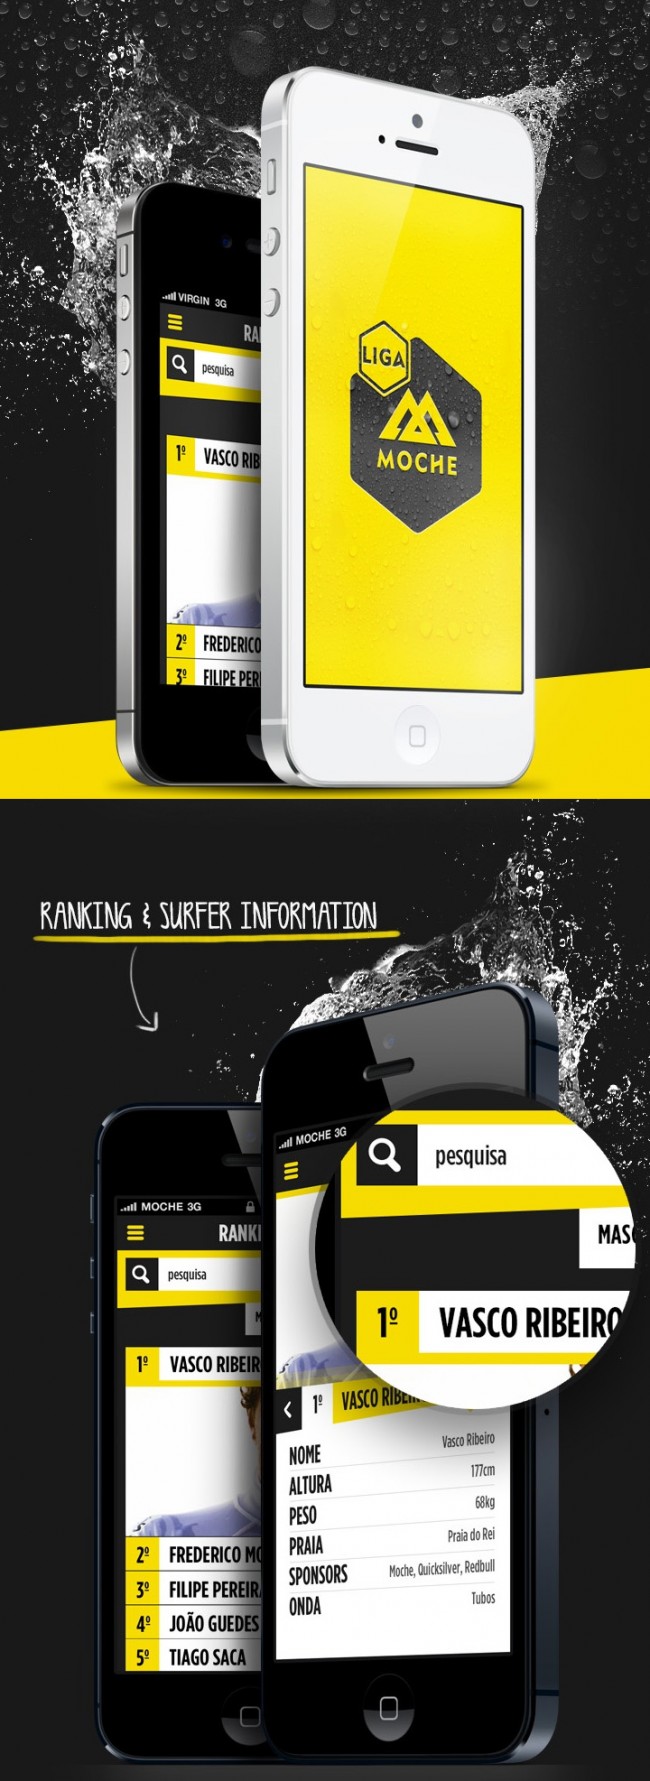 ui mobile 650x1781 Mobile UI Design Inspiration #1